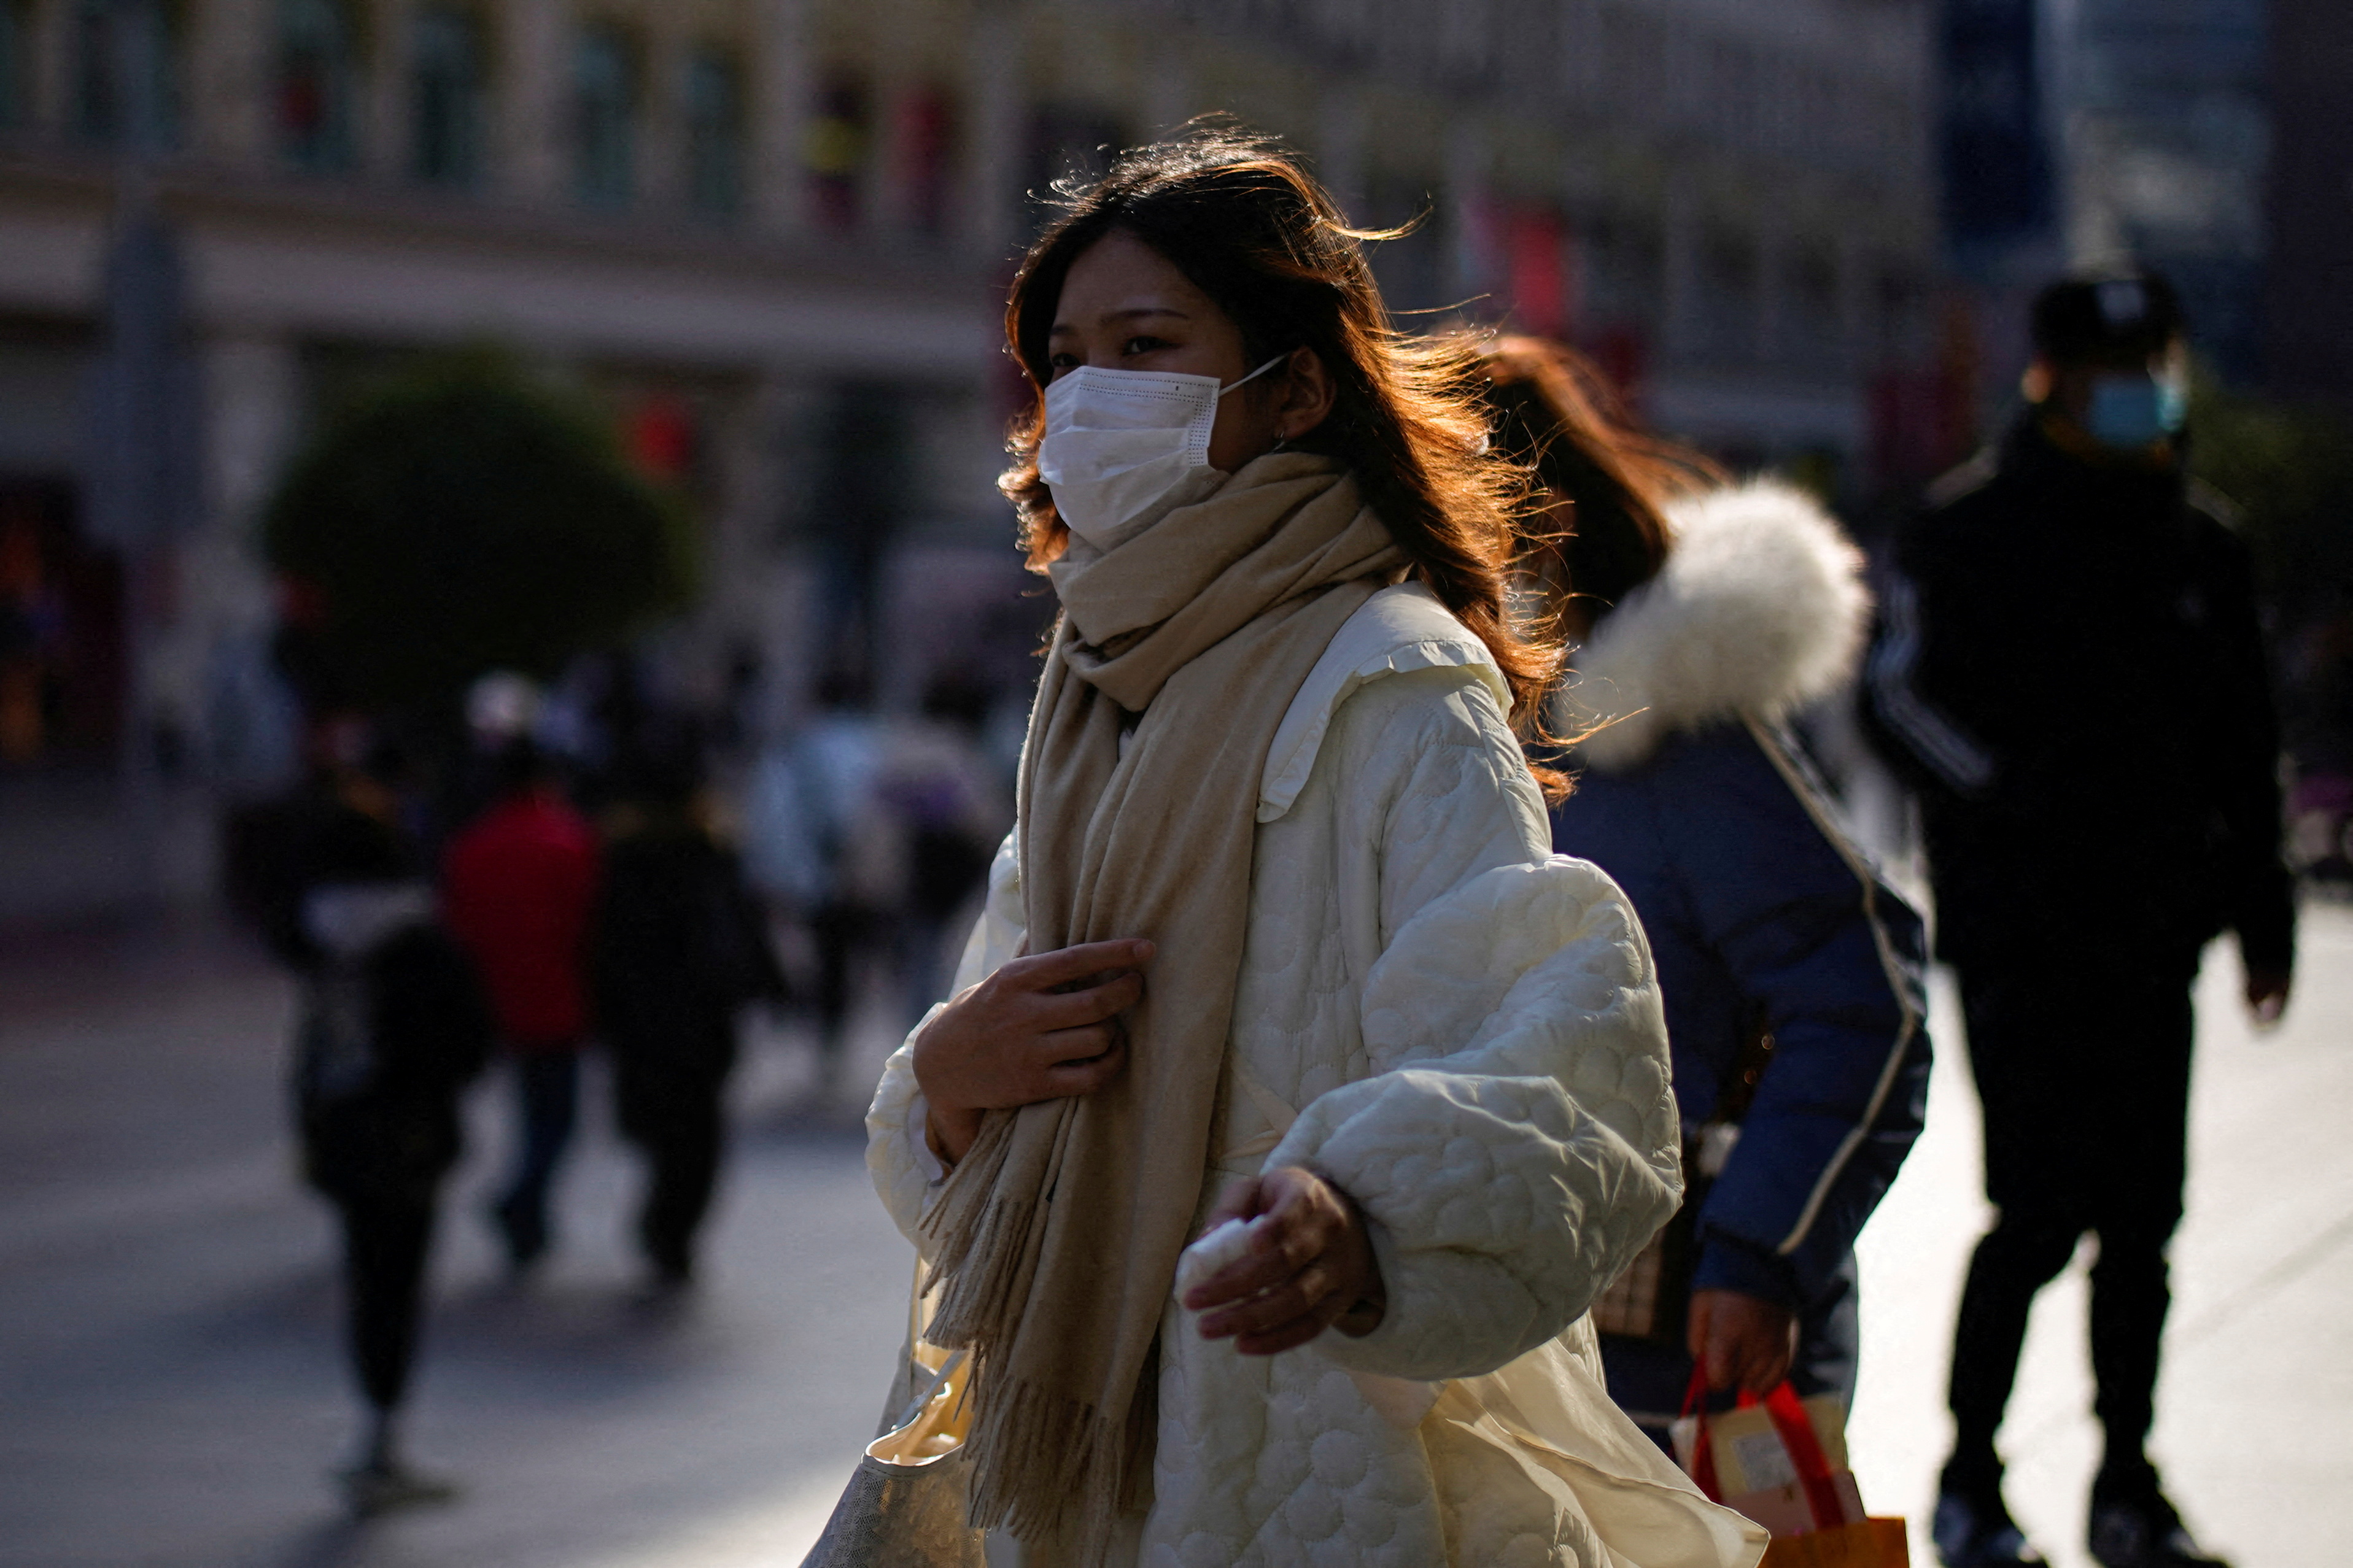 COVID-19 pandemic, in Shanghai